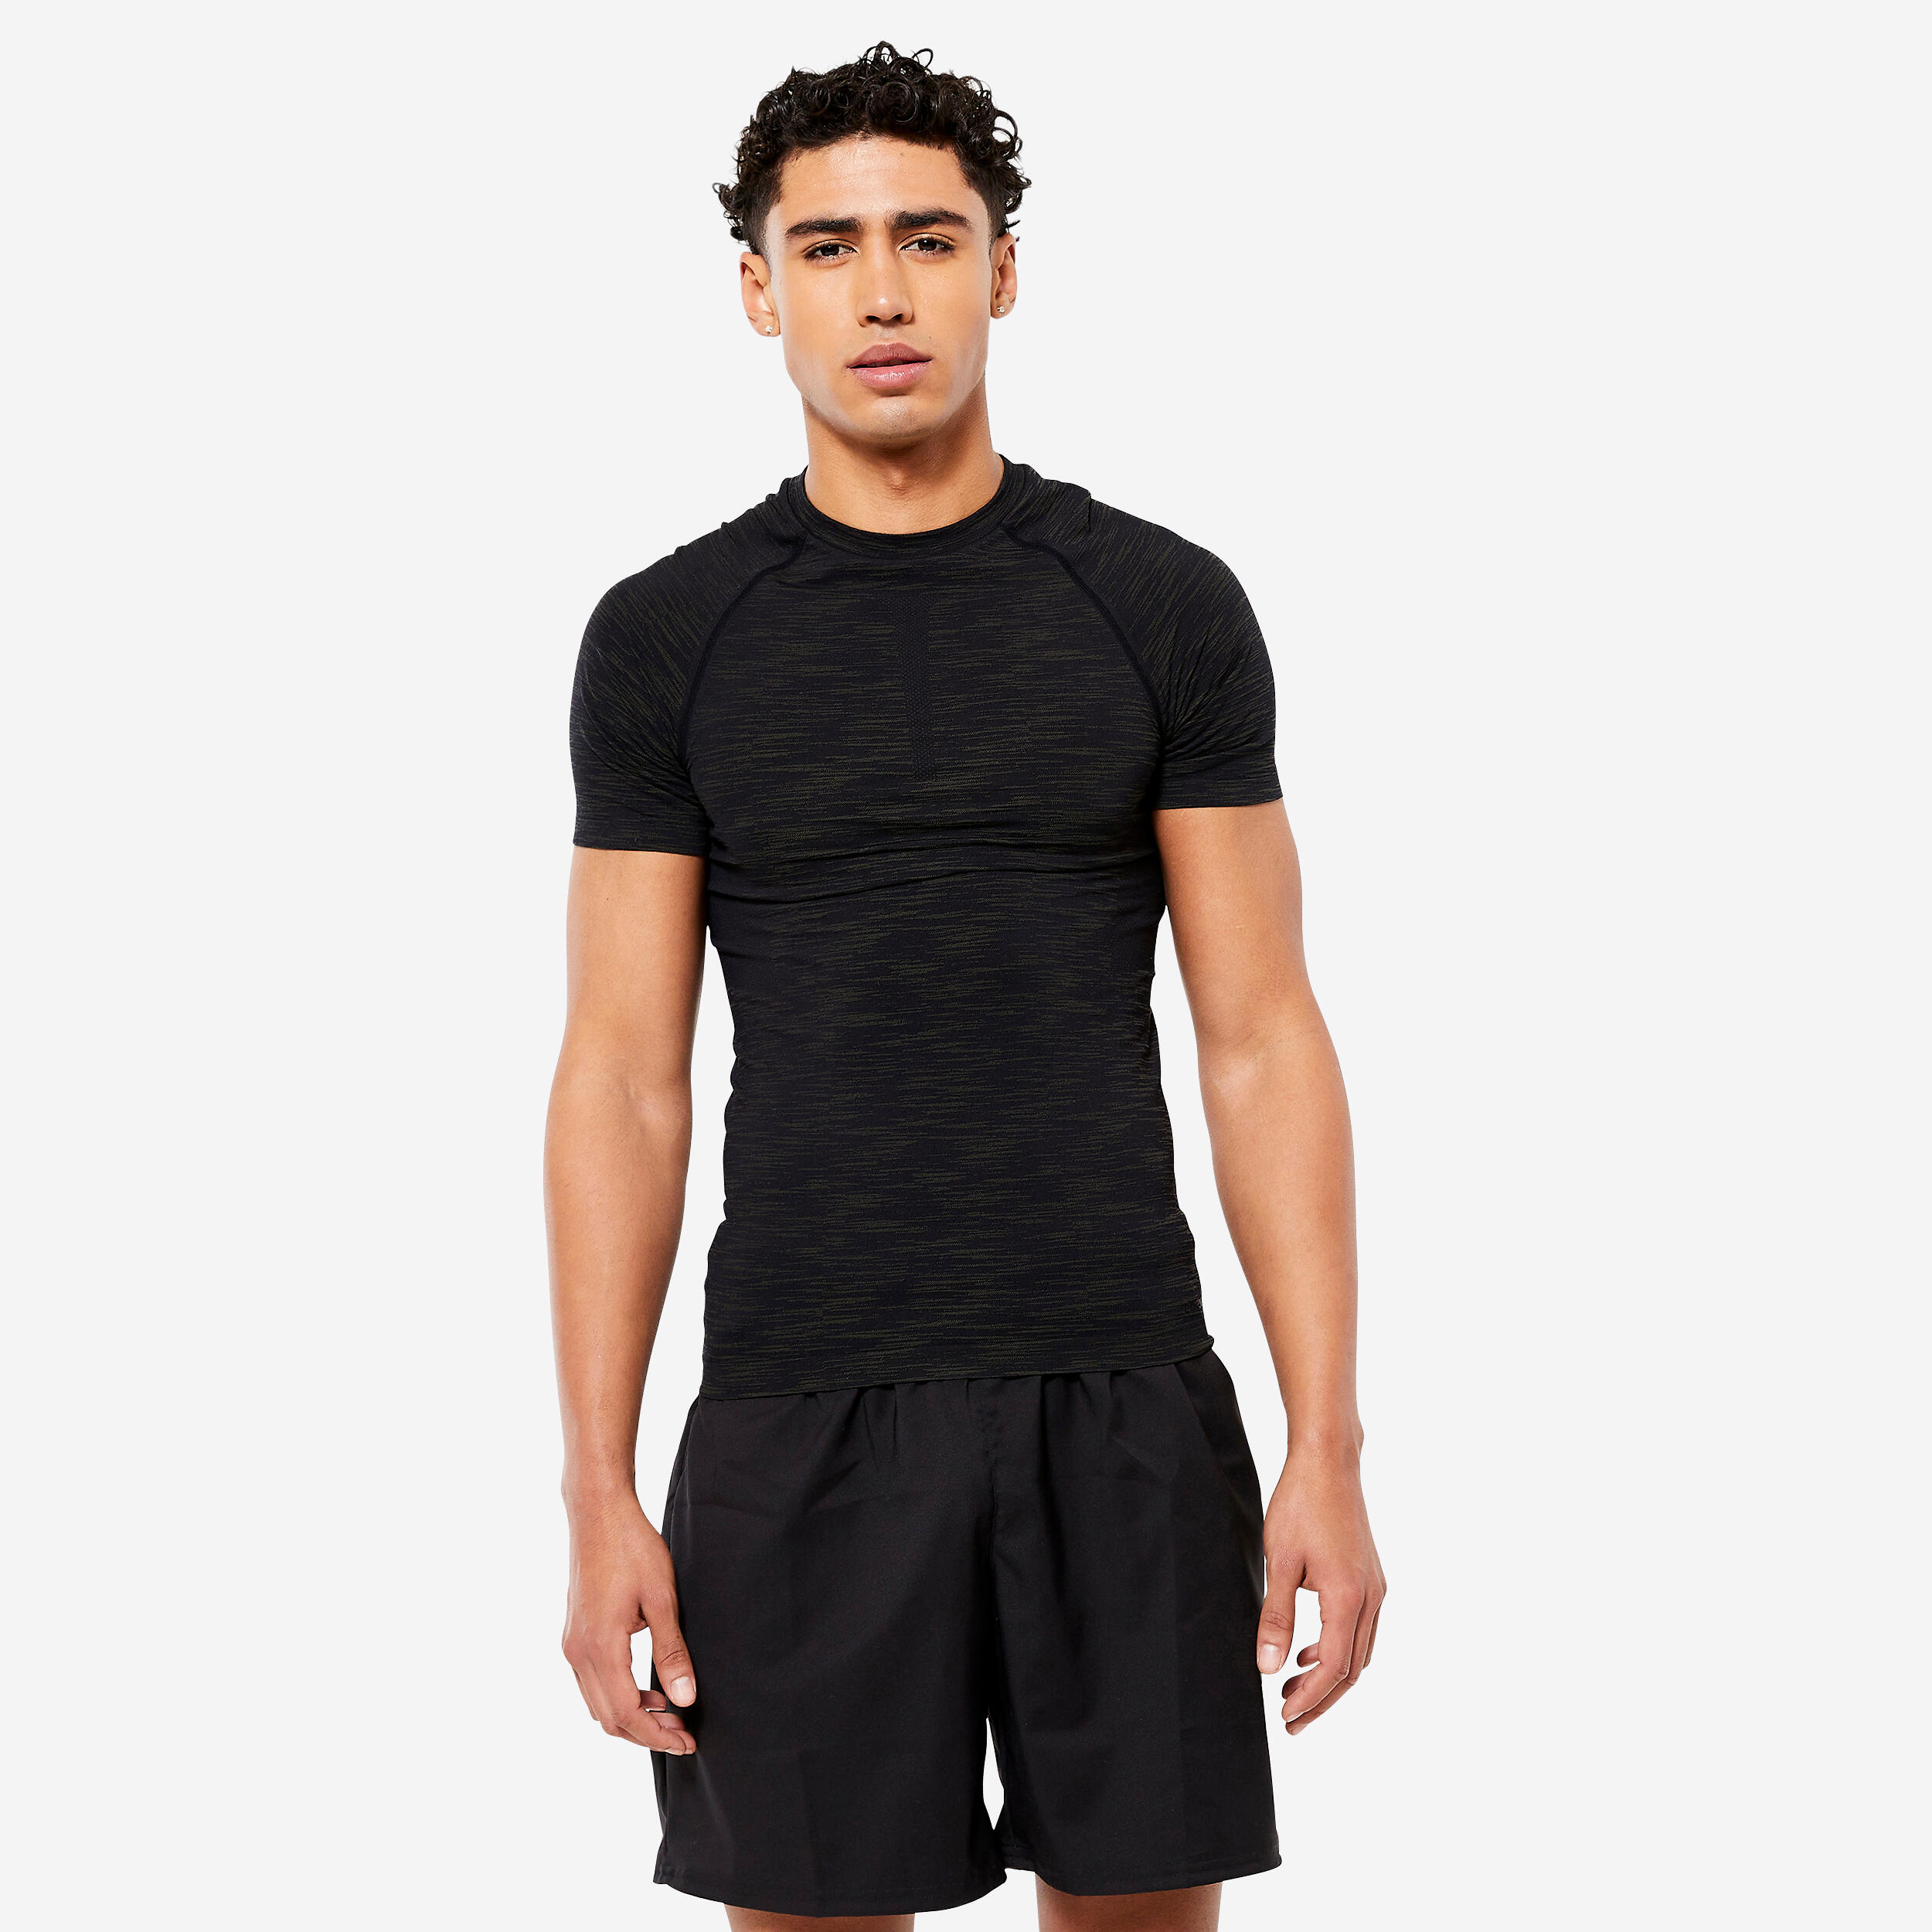 Buy Men's Fitness Short-Sleeve Compression shirt Online! – Kewlioo